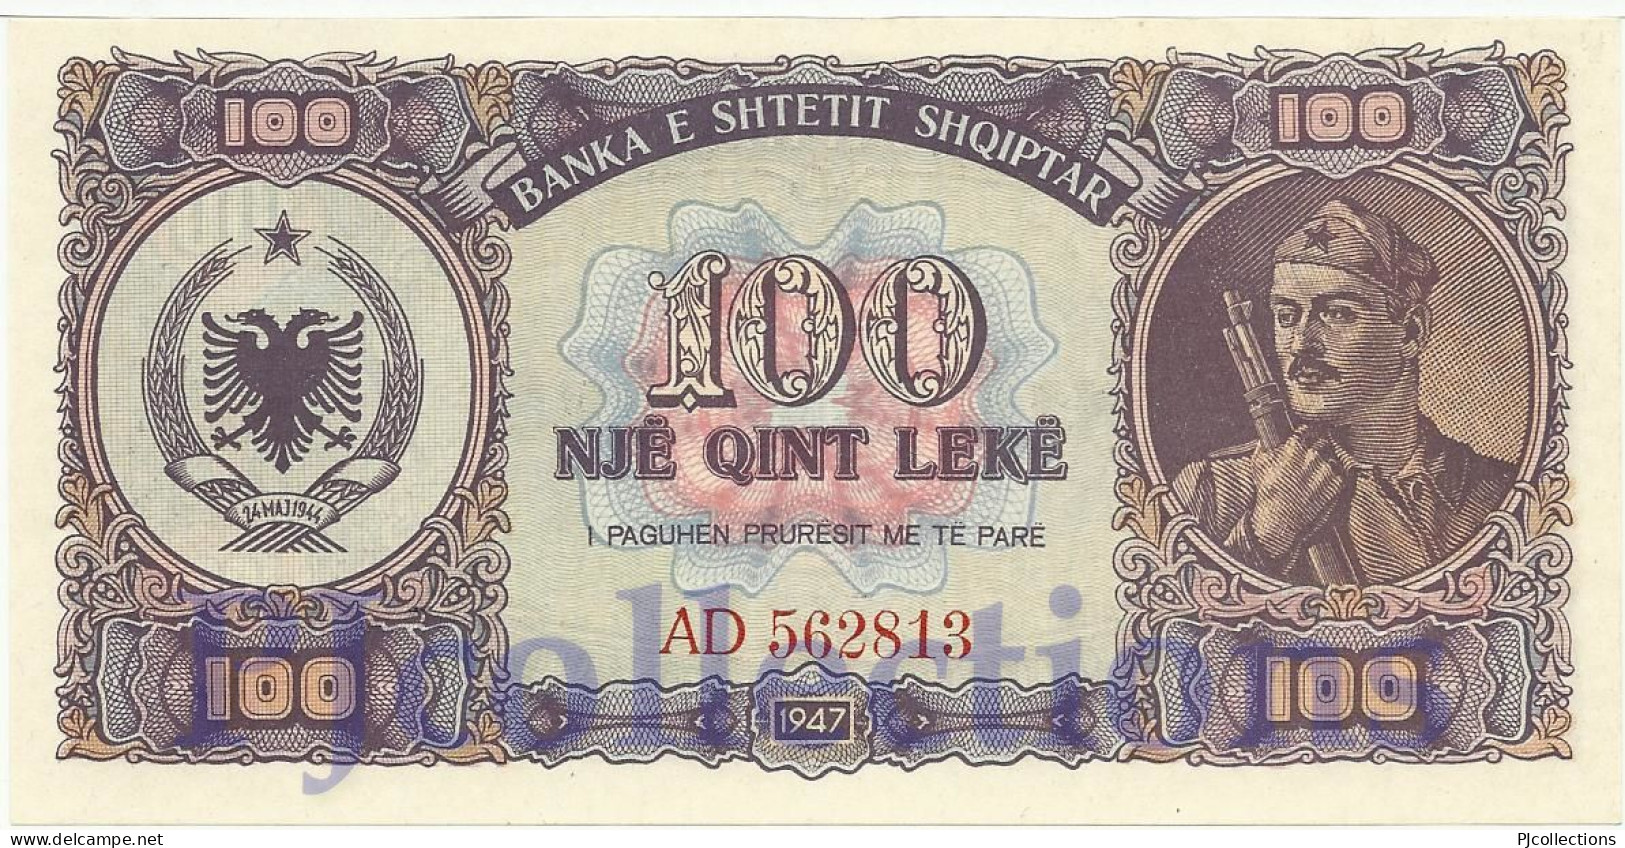 ALBANIA 100 LEKE 1947 PICK 21 UNC RARE SERIES "AD562813" - Albanien